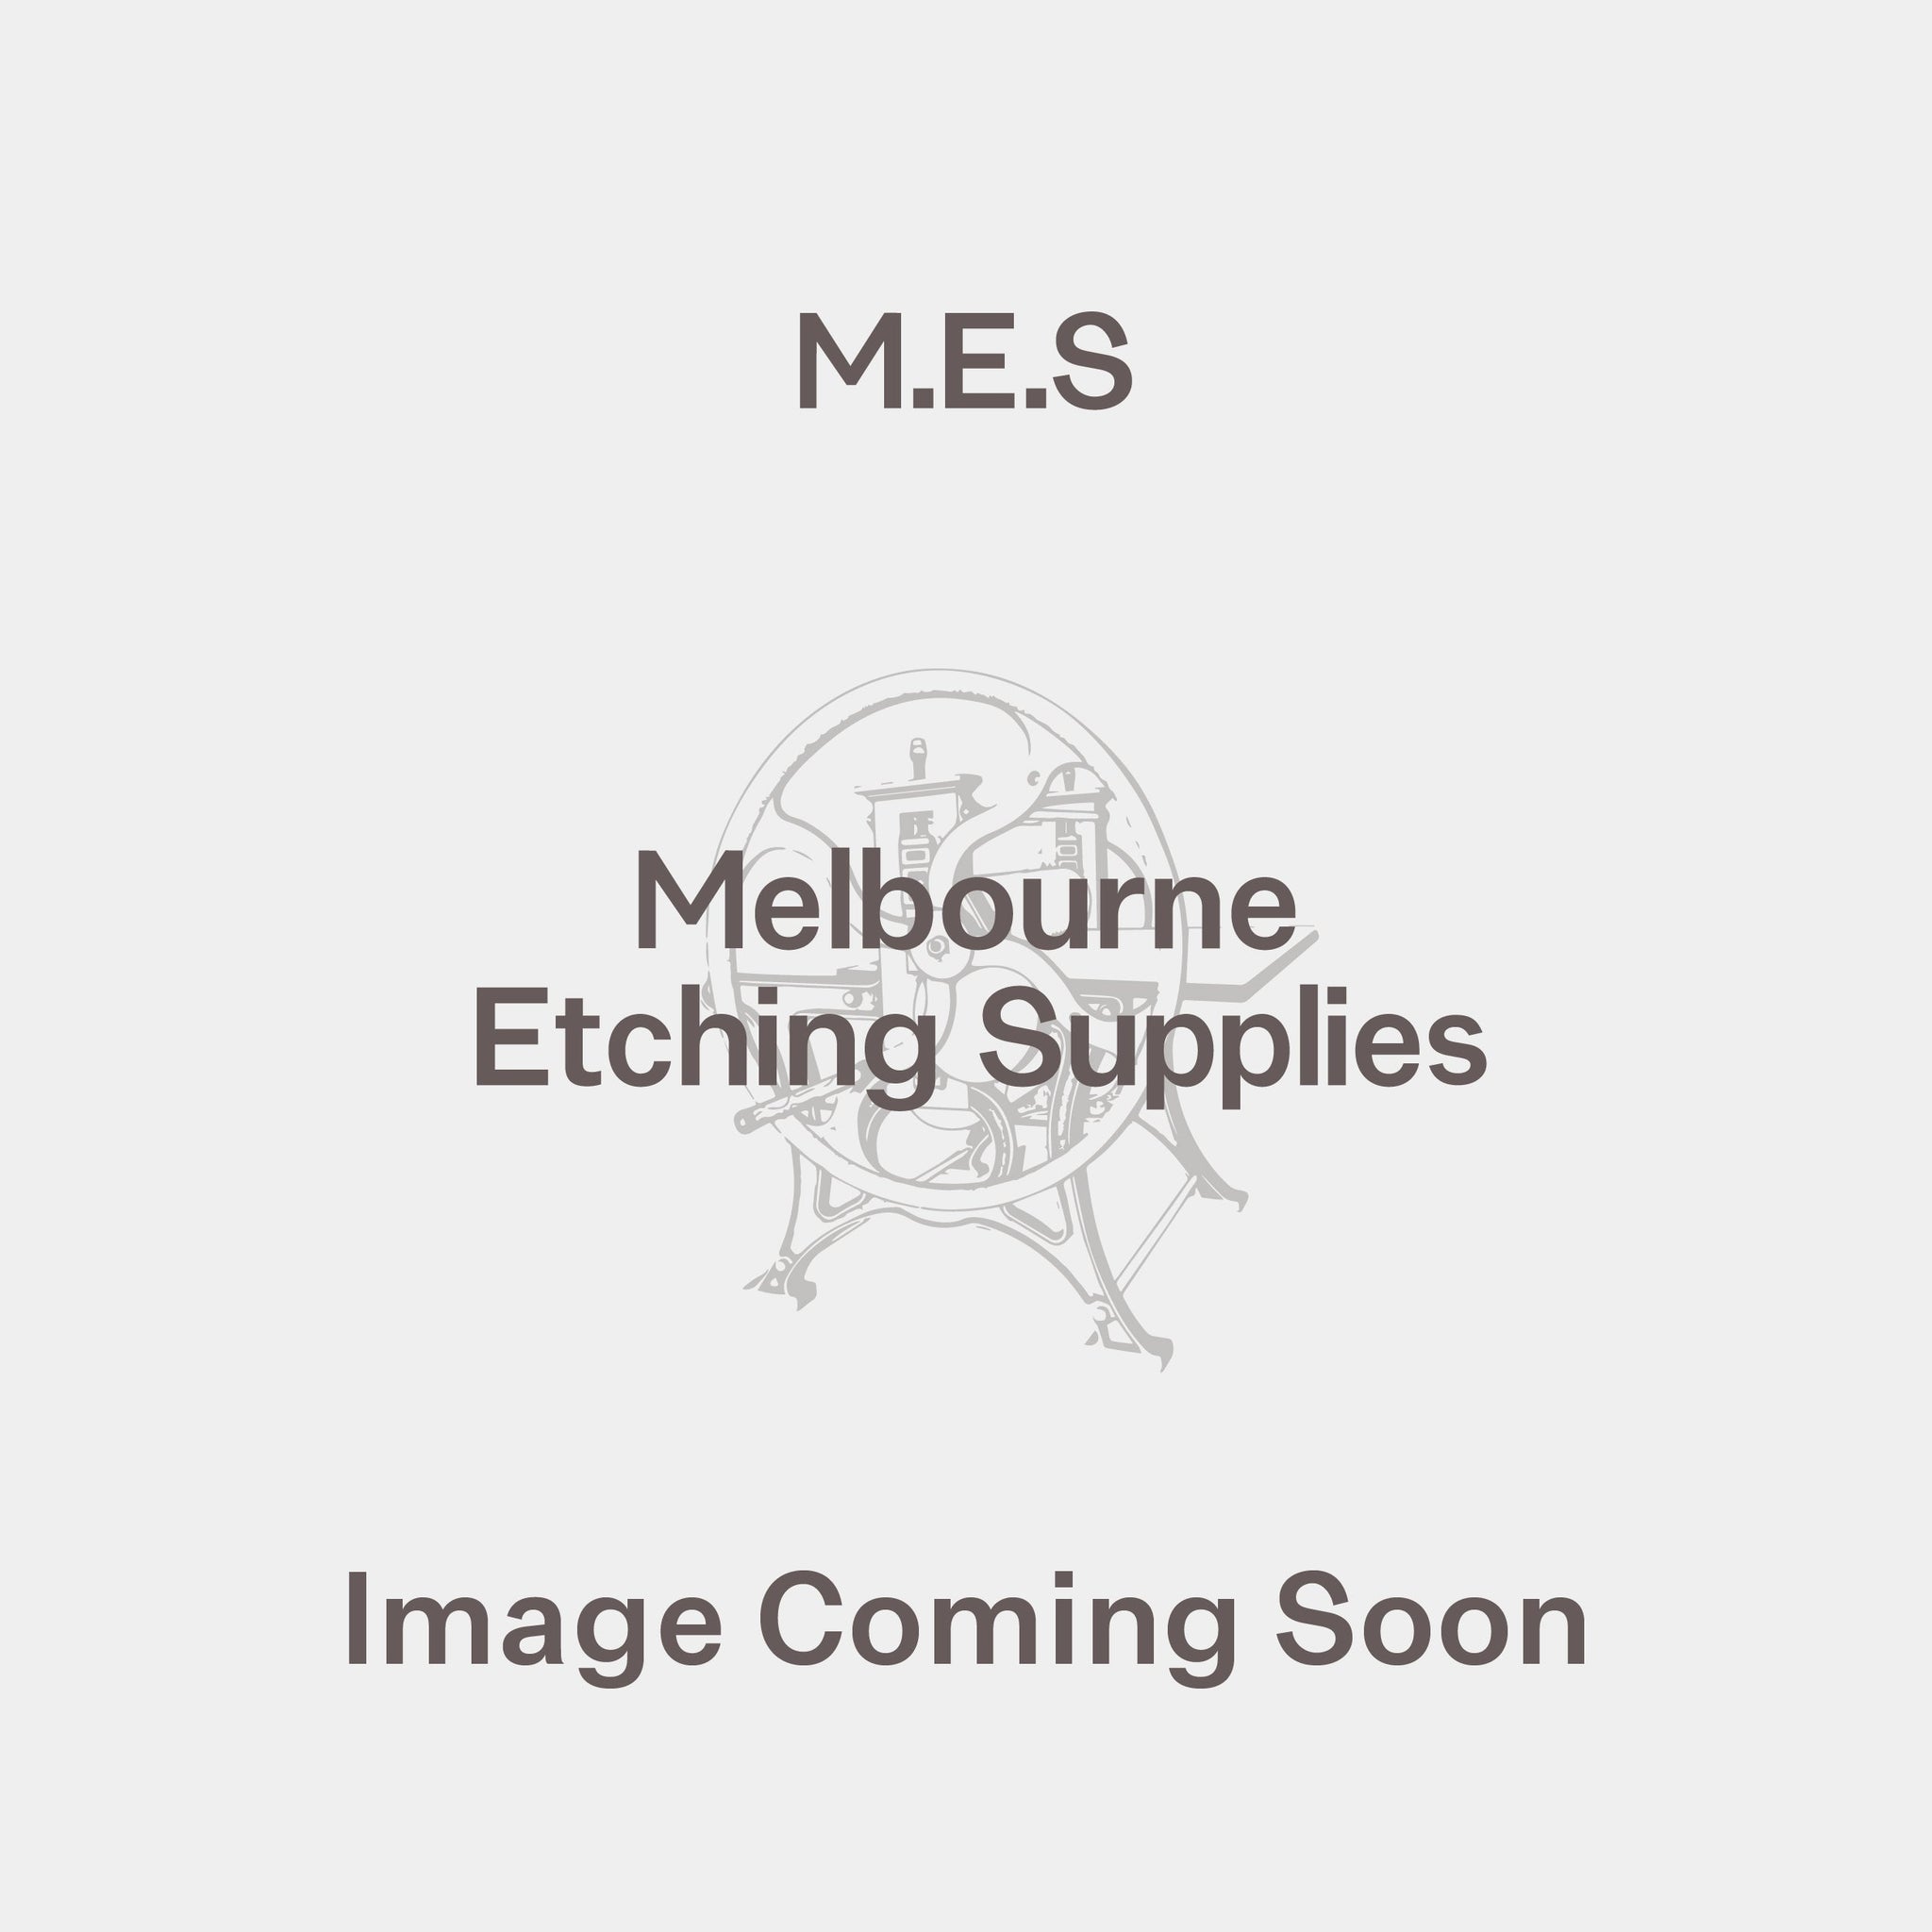 Dutch Etching 250gsm - Melbourne Etching Supplies